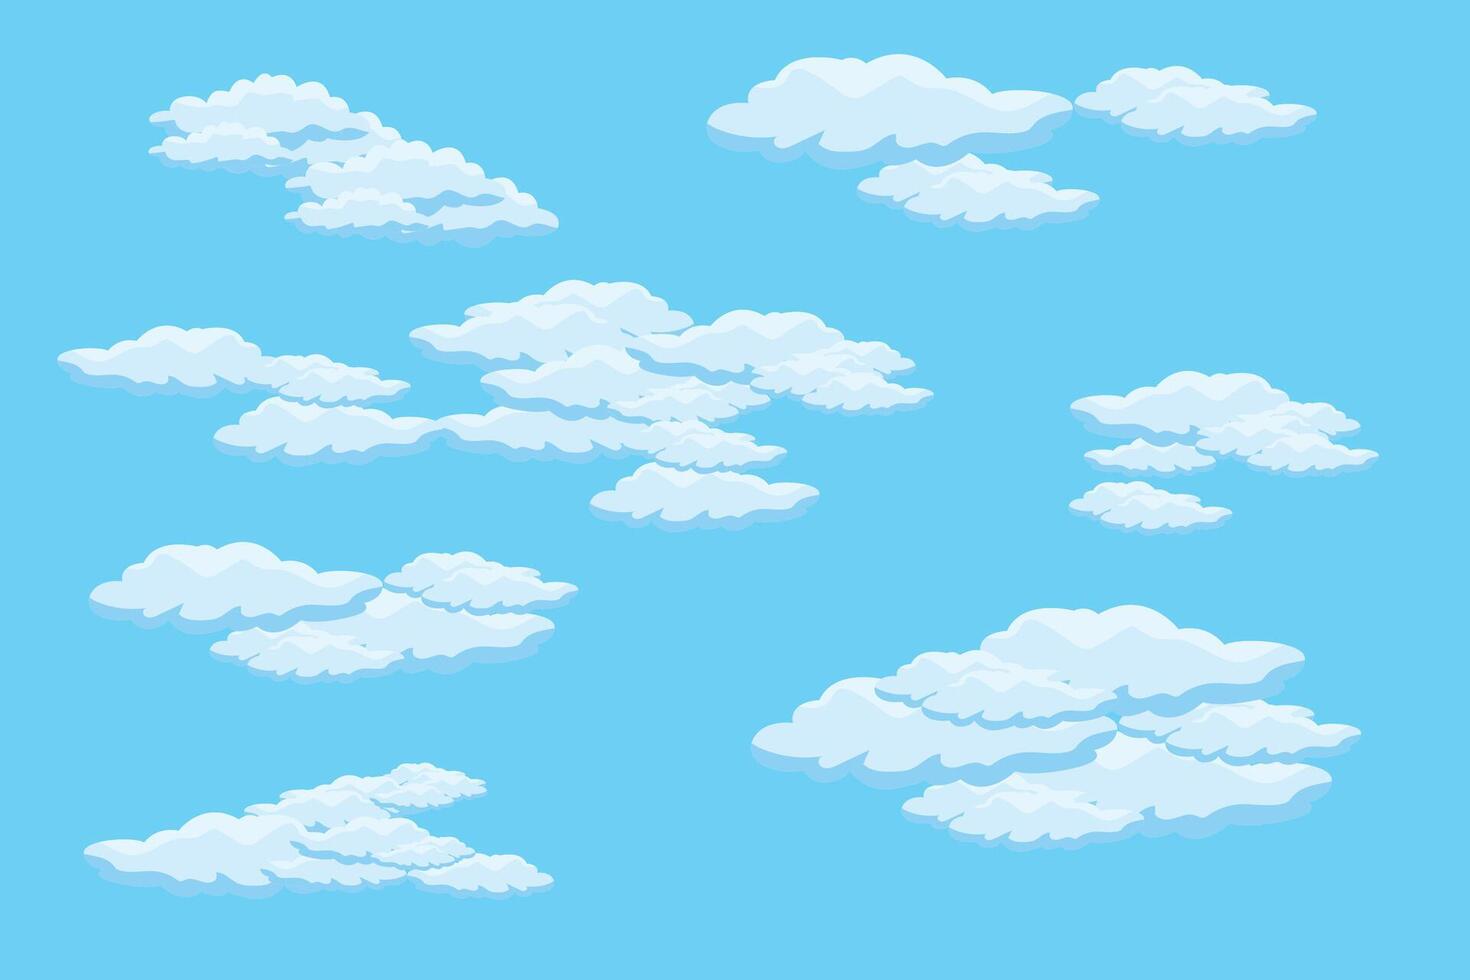 wolk lucht tafereel achtergrond vector gemakkelijk wolk illustratie sjabloon ontwerp